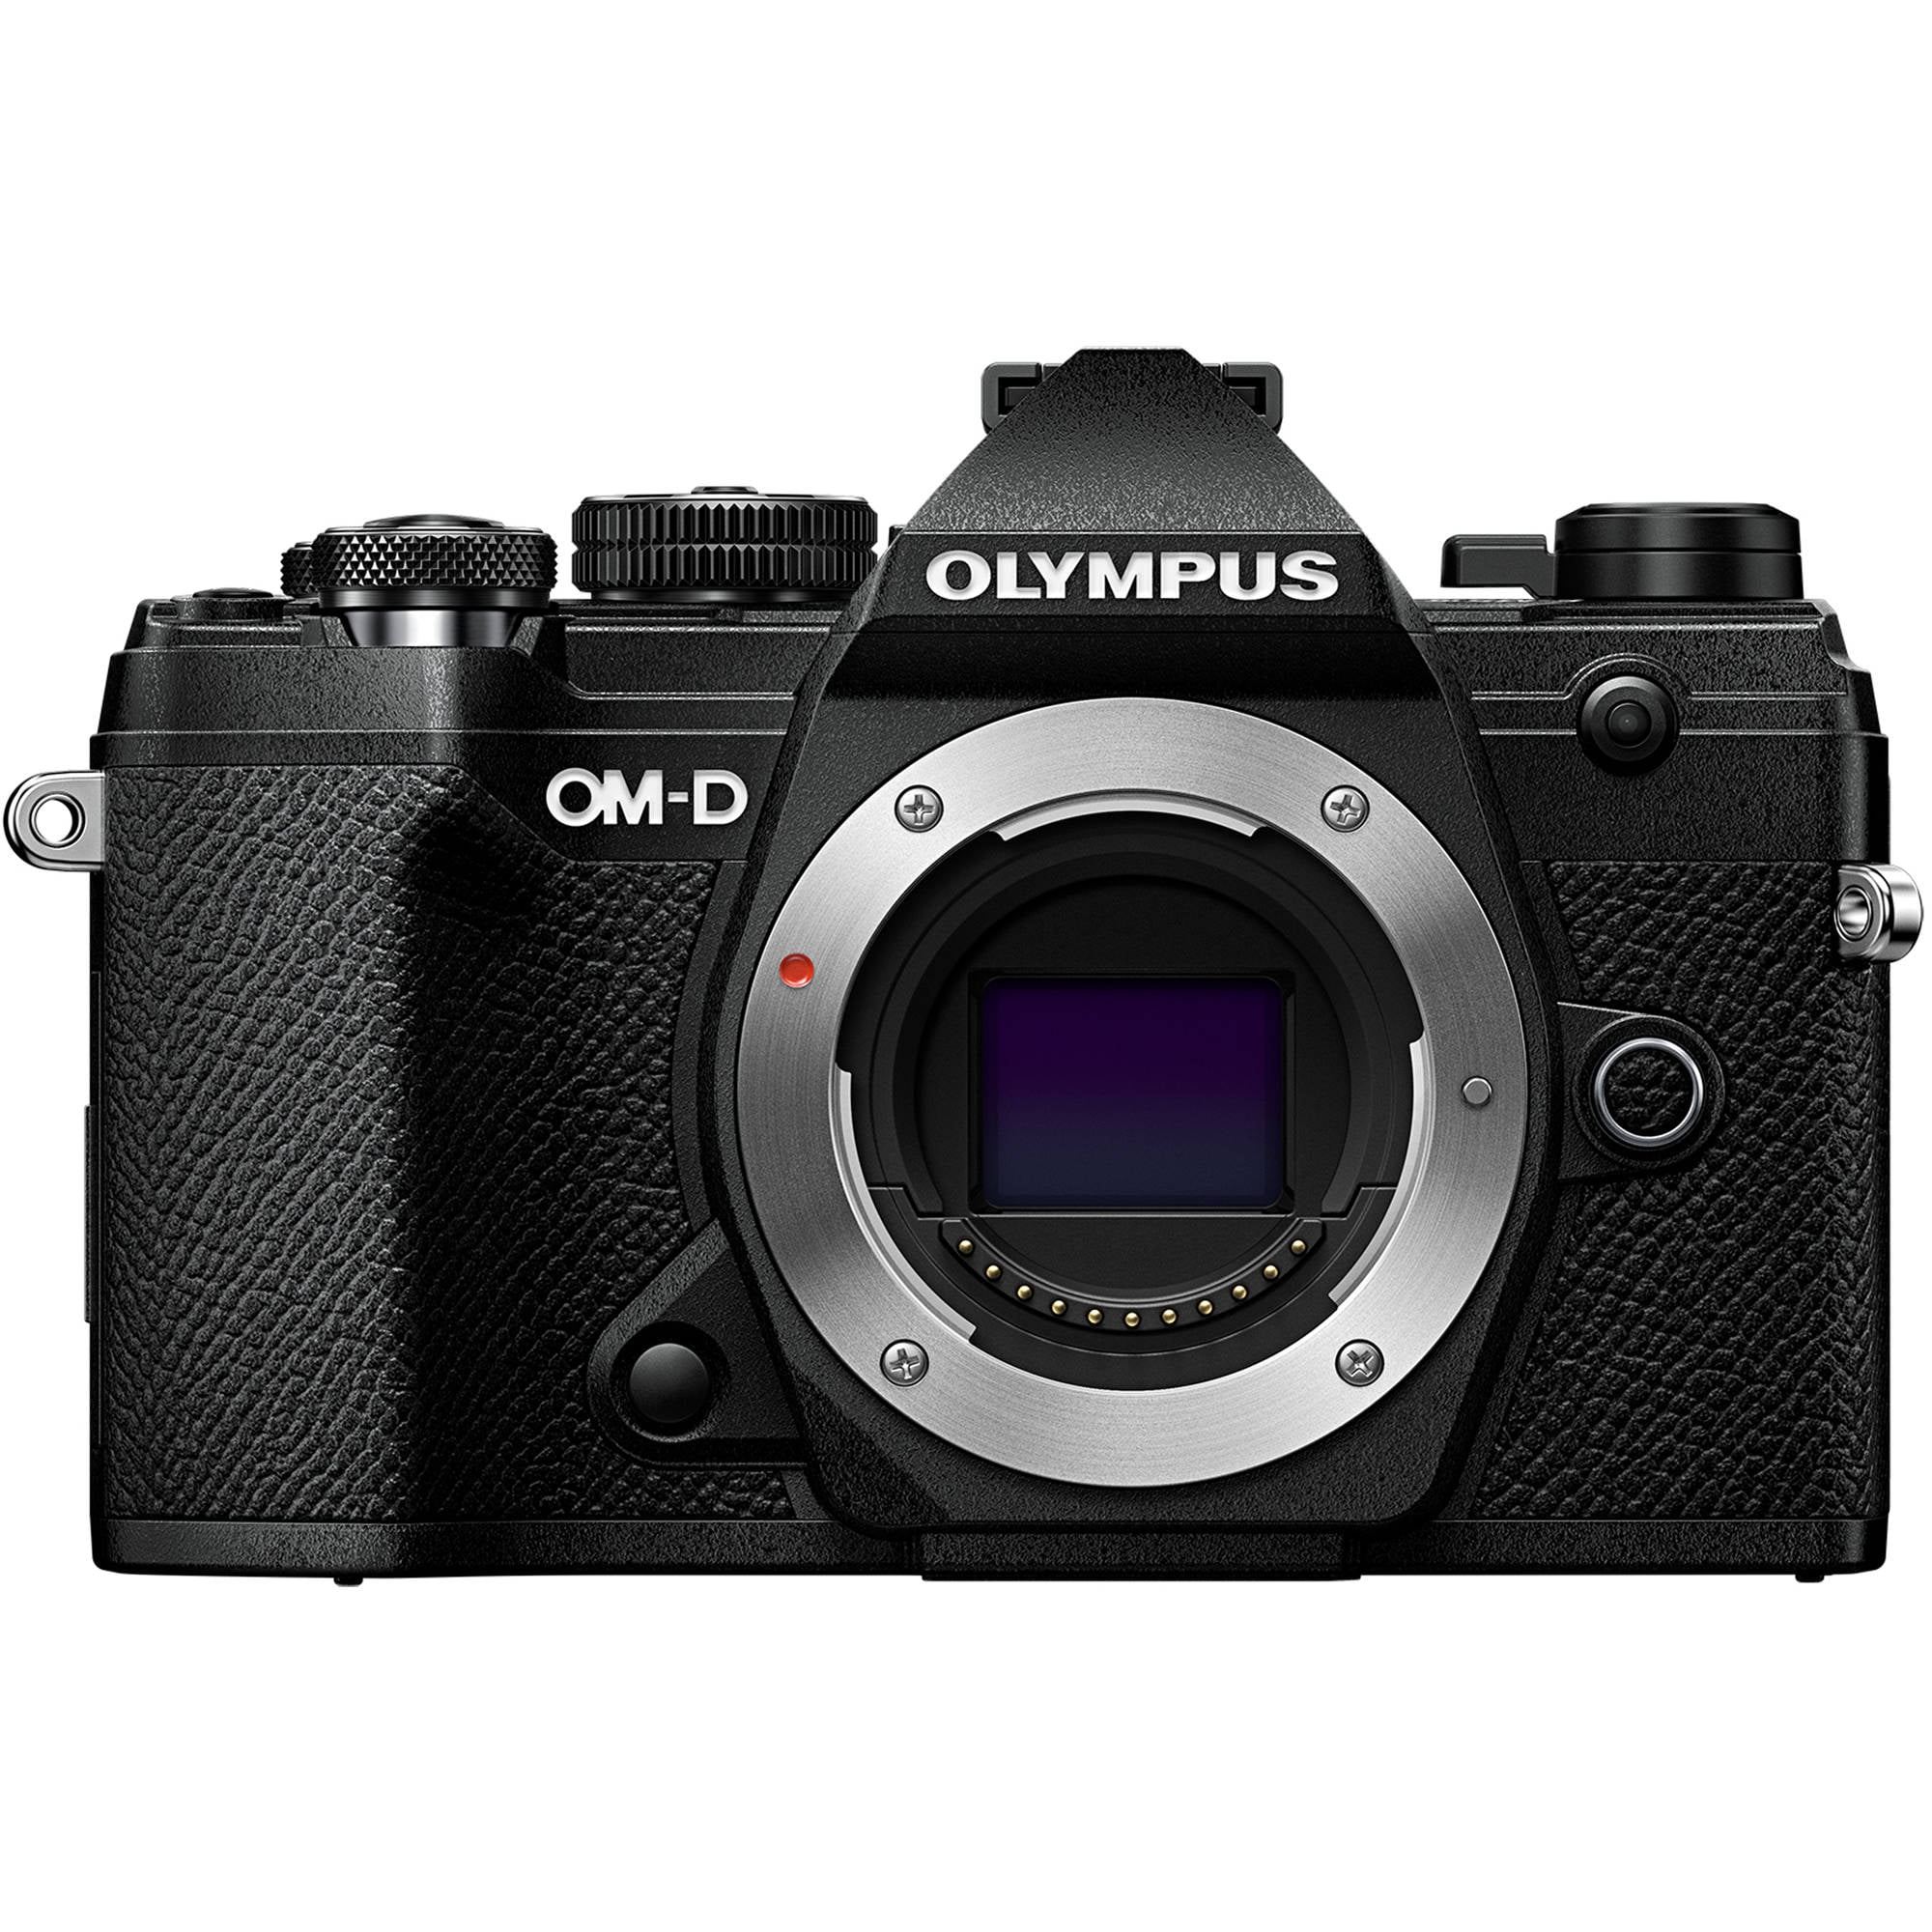 Picture of Olympus America V207090BU000 OM-D E-M5 Mark III 20.4 Megapixel Mirrorless Camera Body Only - Black